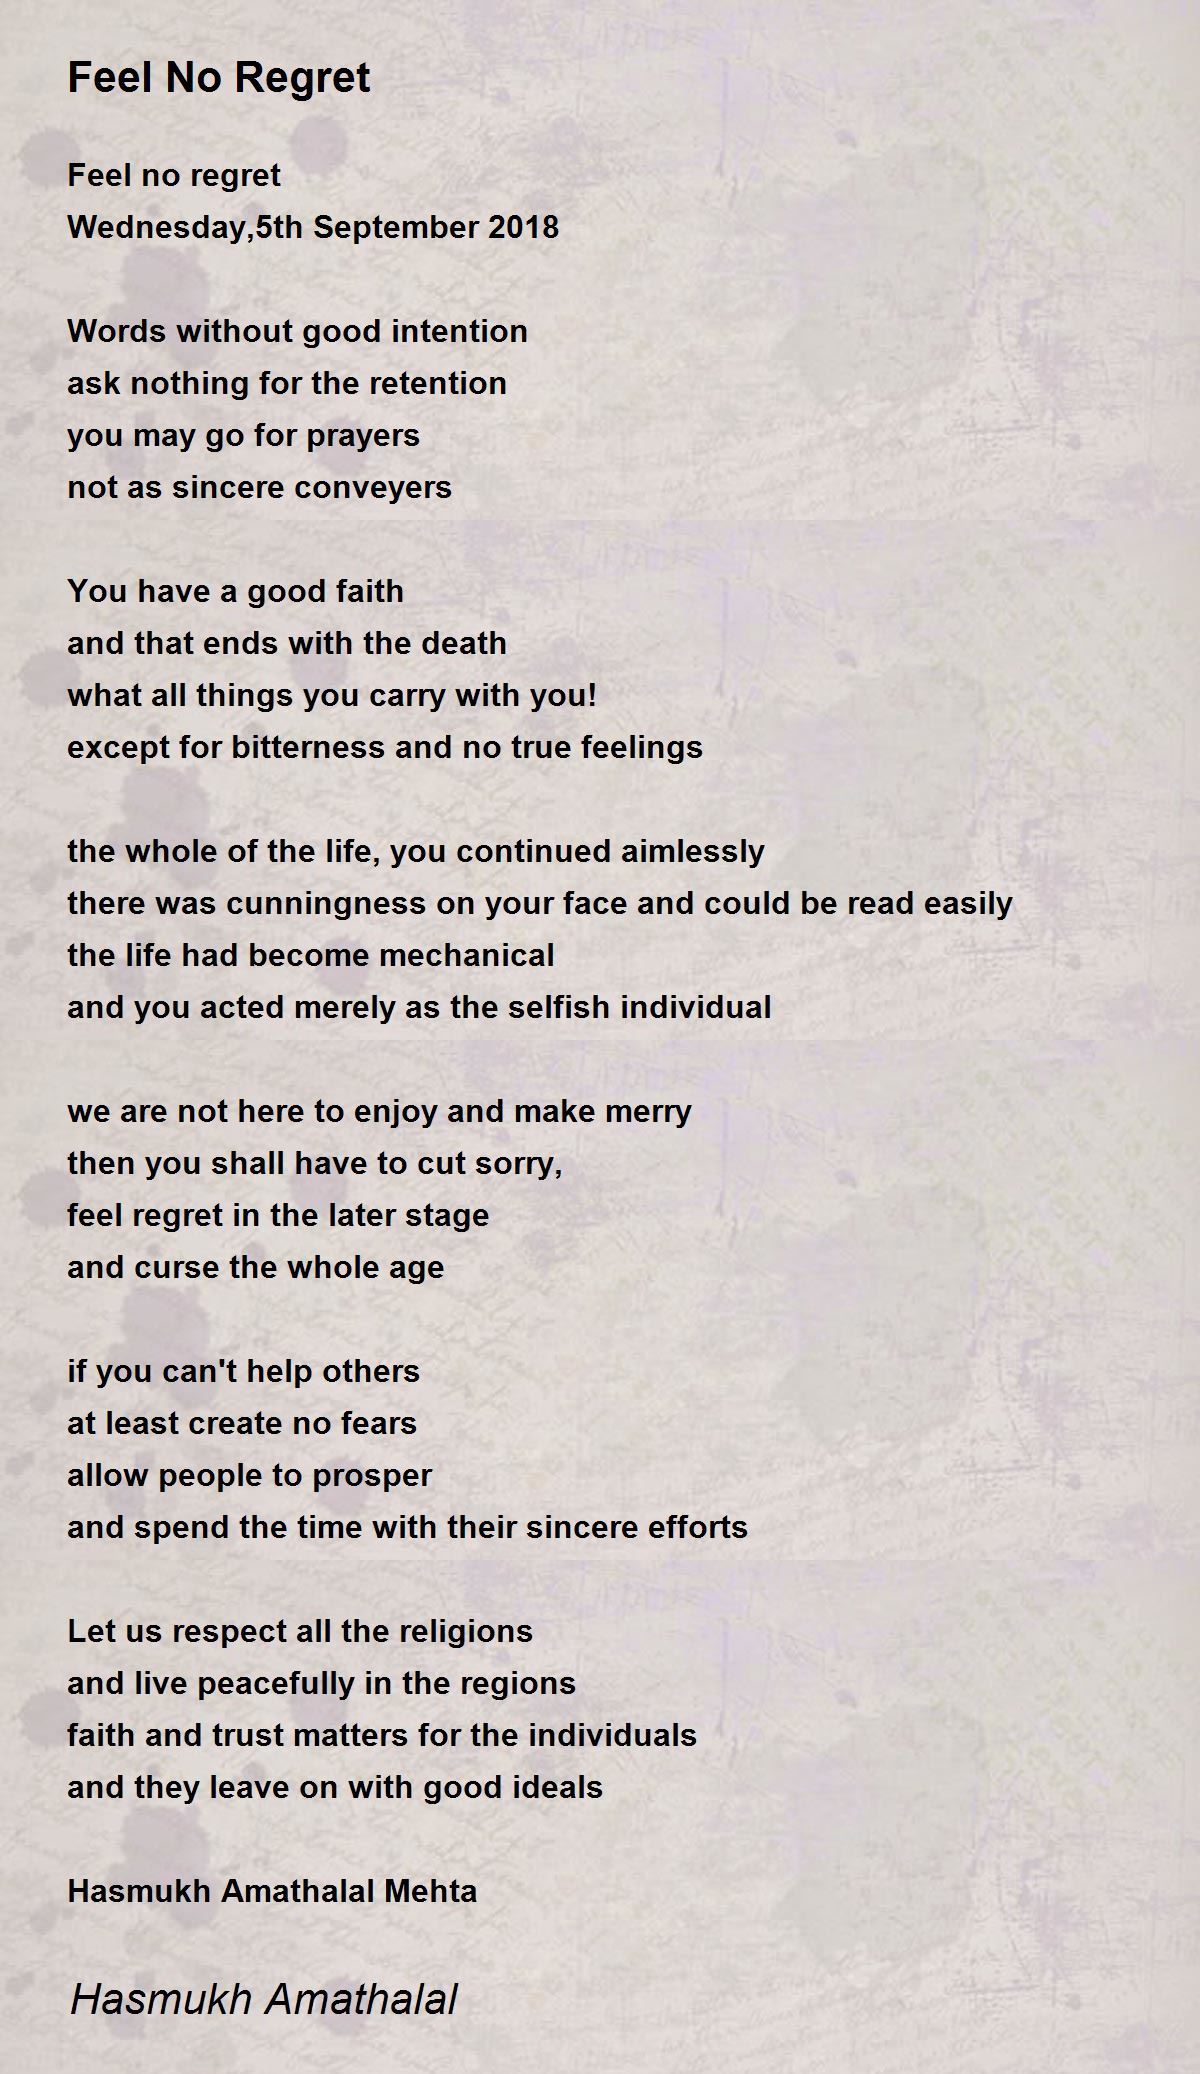 Feel No Regret - Feel No Regret Poem by Mehta Hasmukh Amathaal